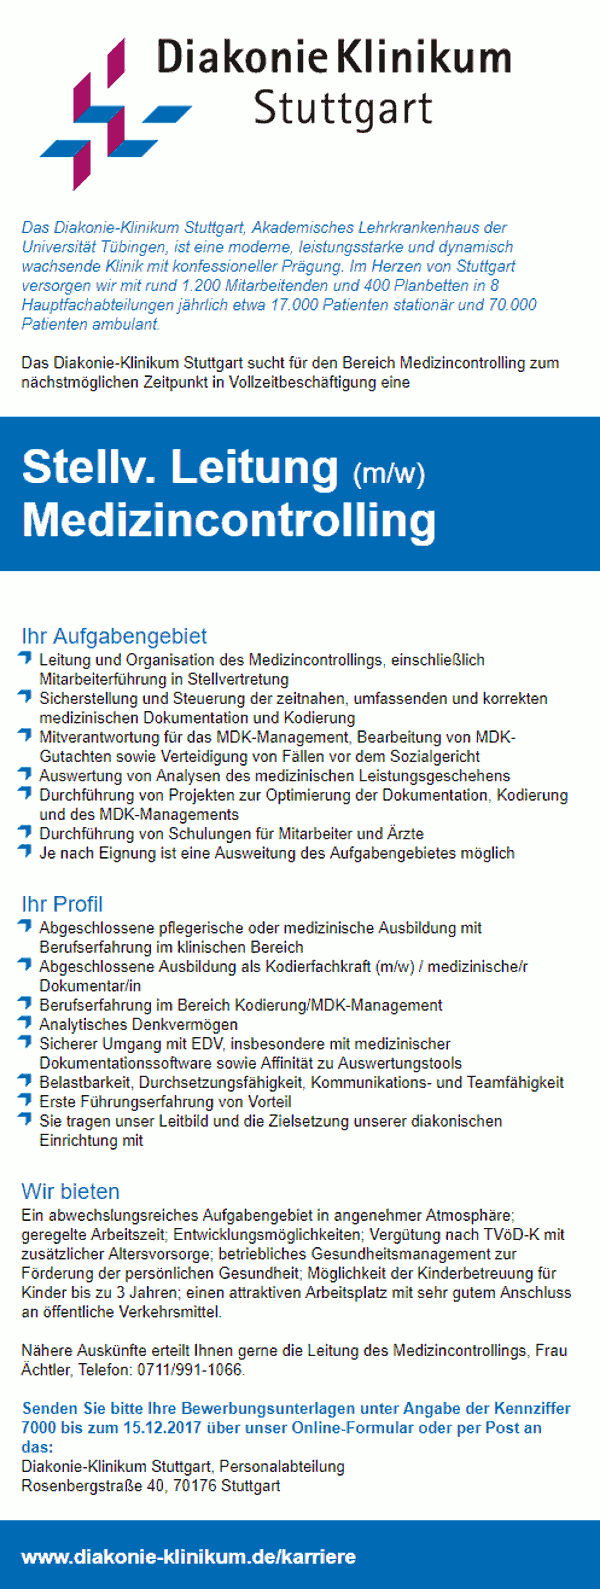 Diakonie-Klinikum Stuttgart: Stellv. Leitung Medizincontrolling (m/w)